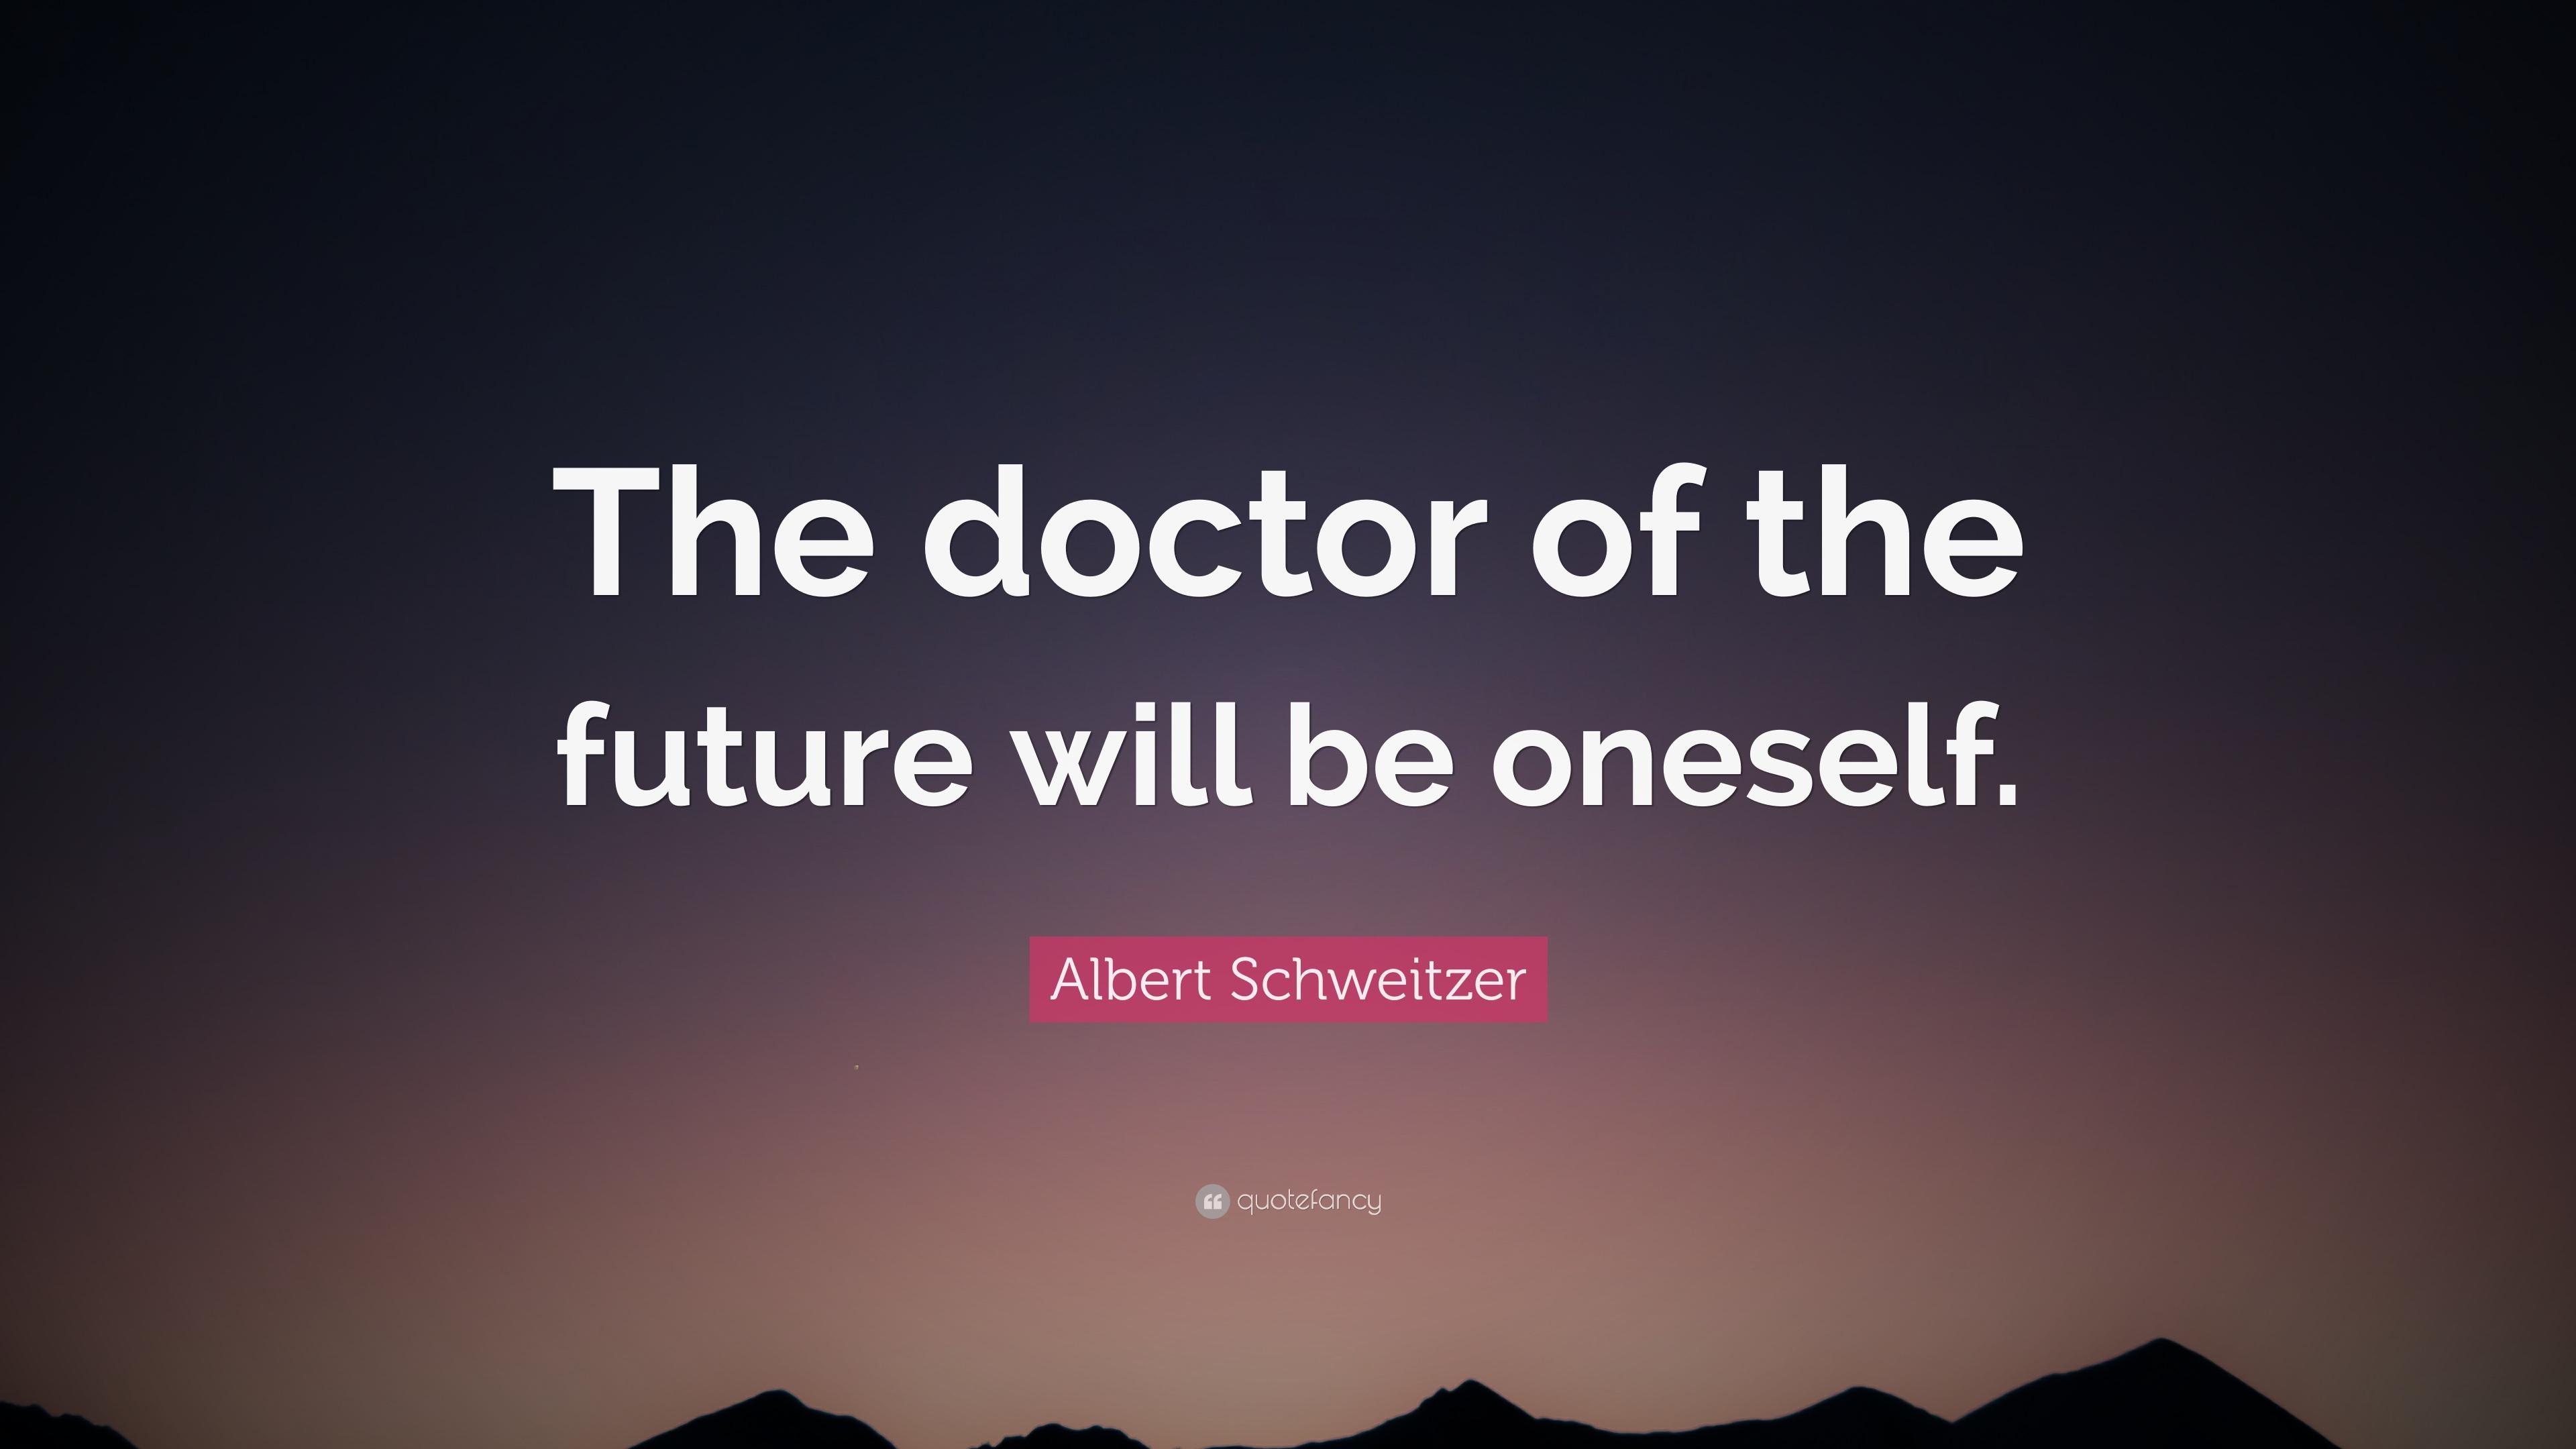 Albert Schweitzer Quote: “The doctor of the future will be oneself